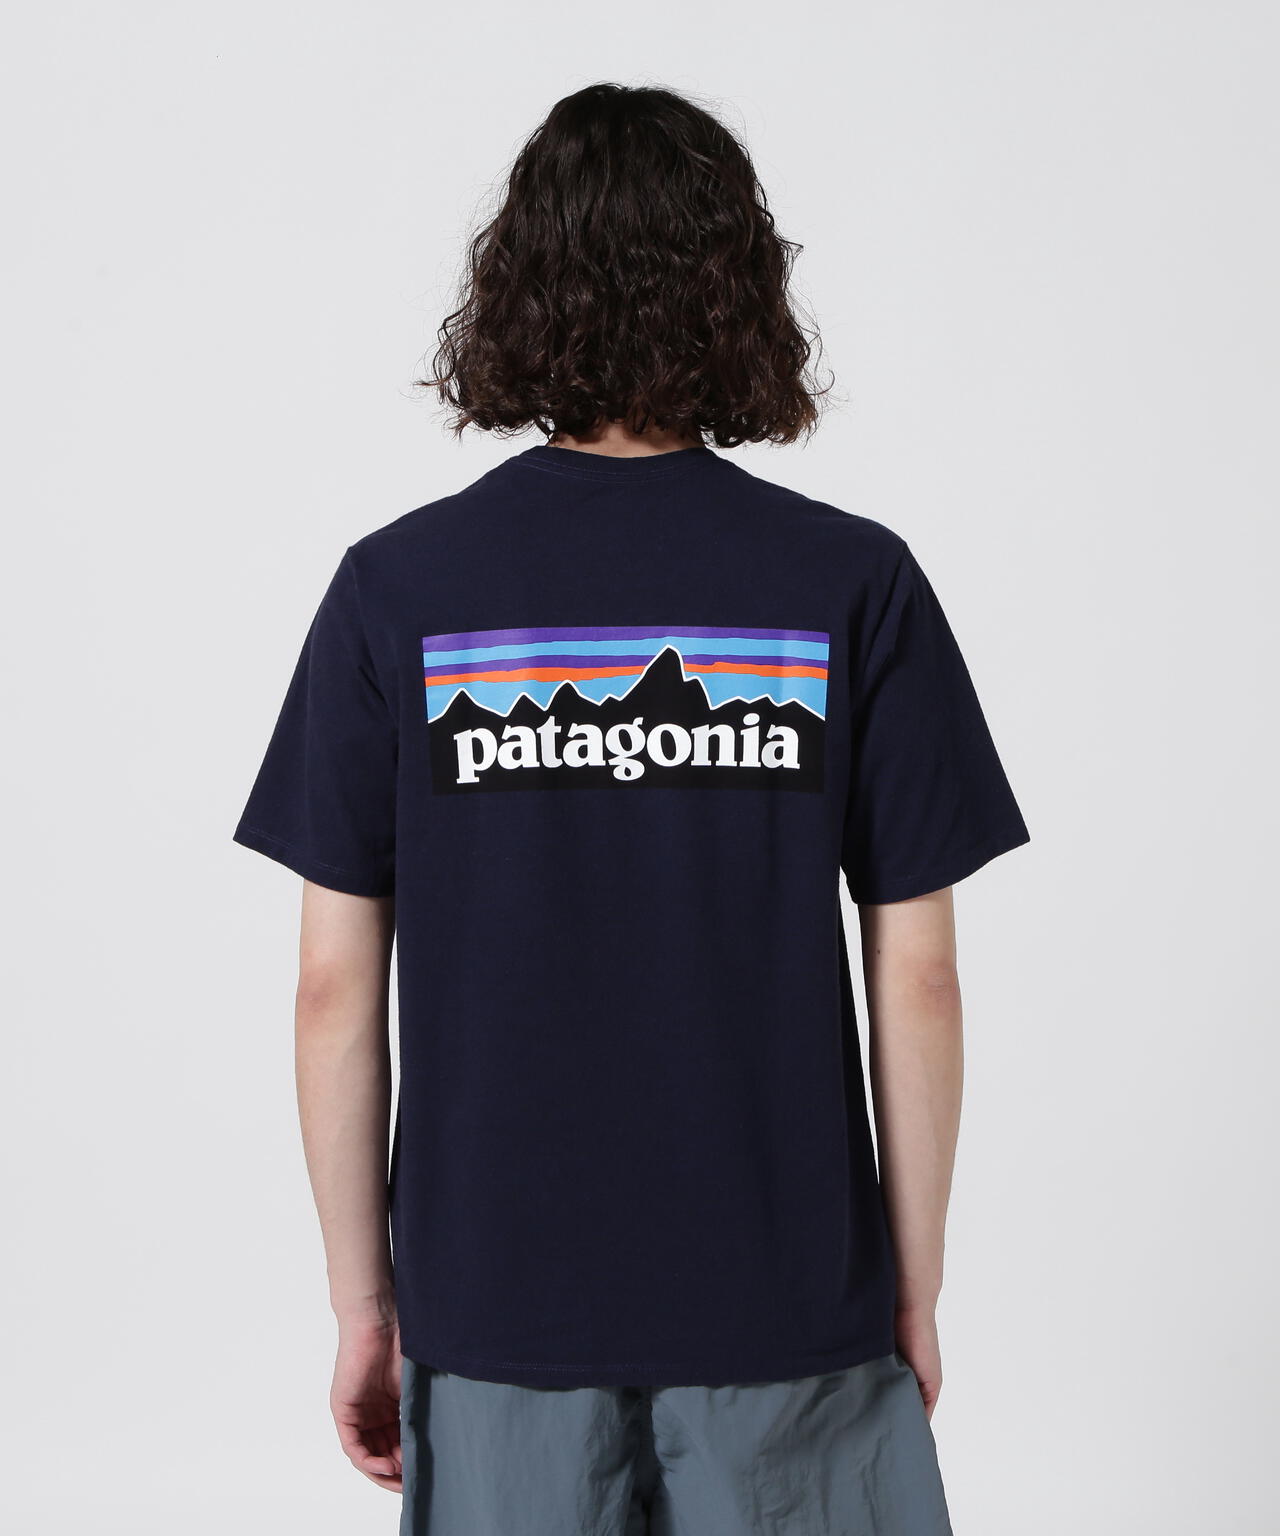 Patagonia/パタゴニア メンズ・P-6ロゴ・レスポンシビリティー 38504